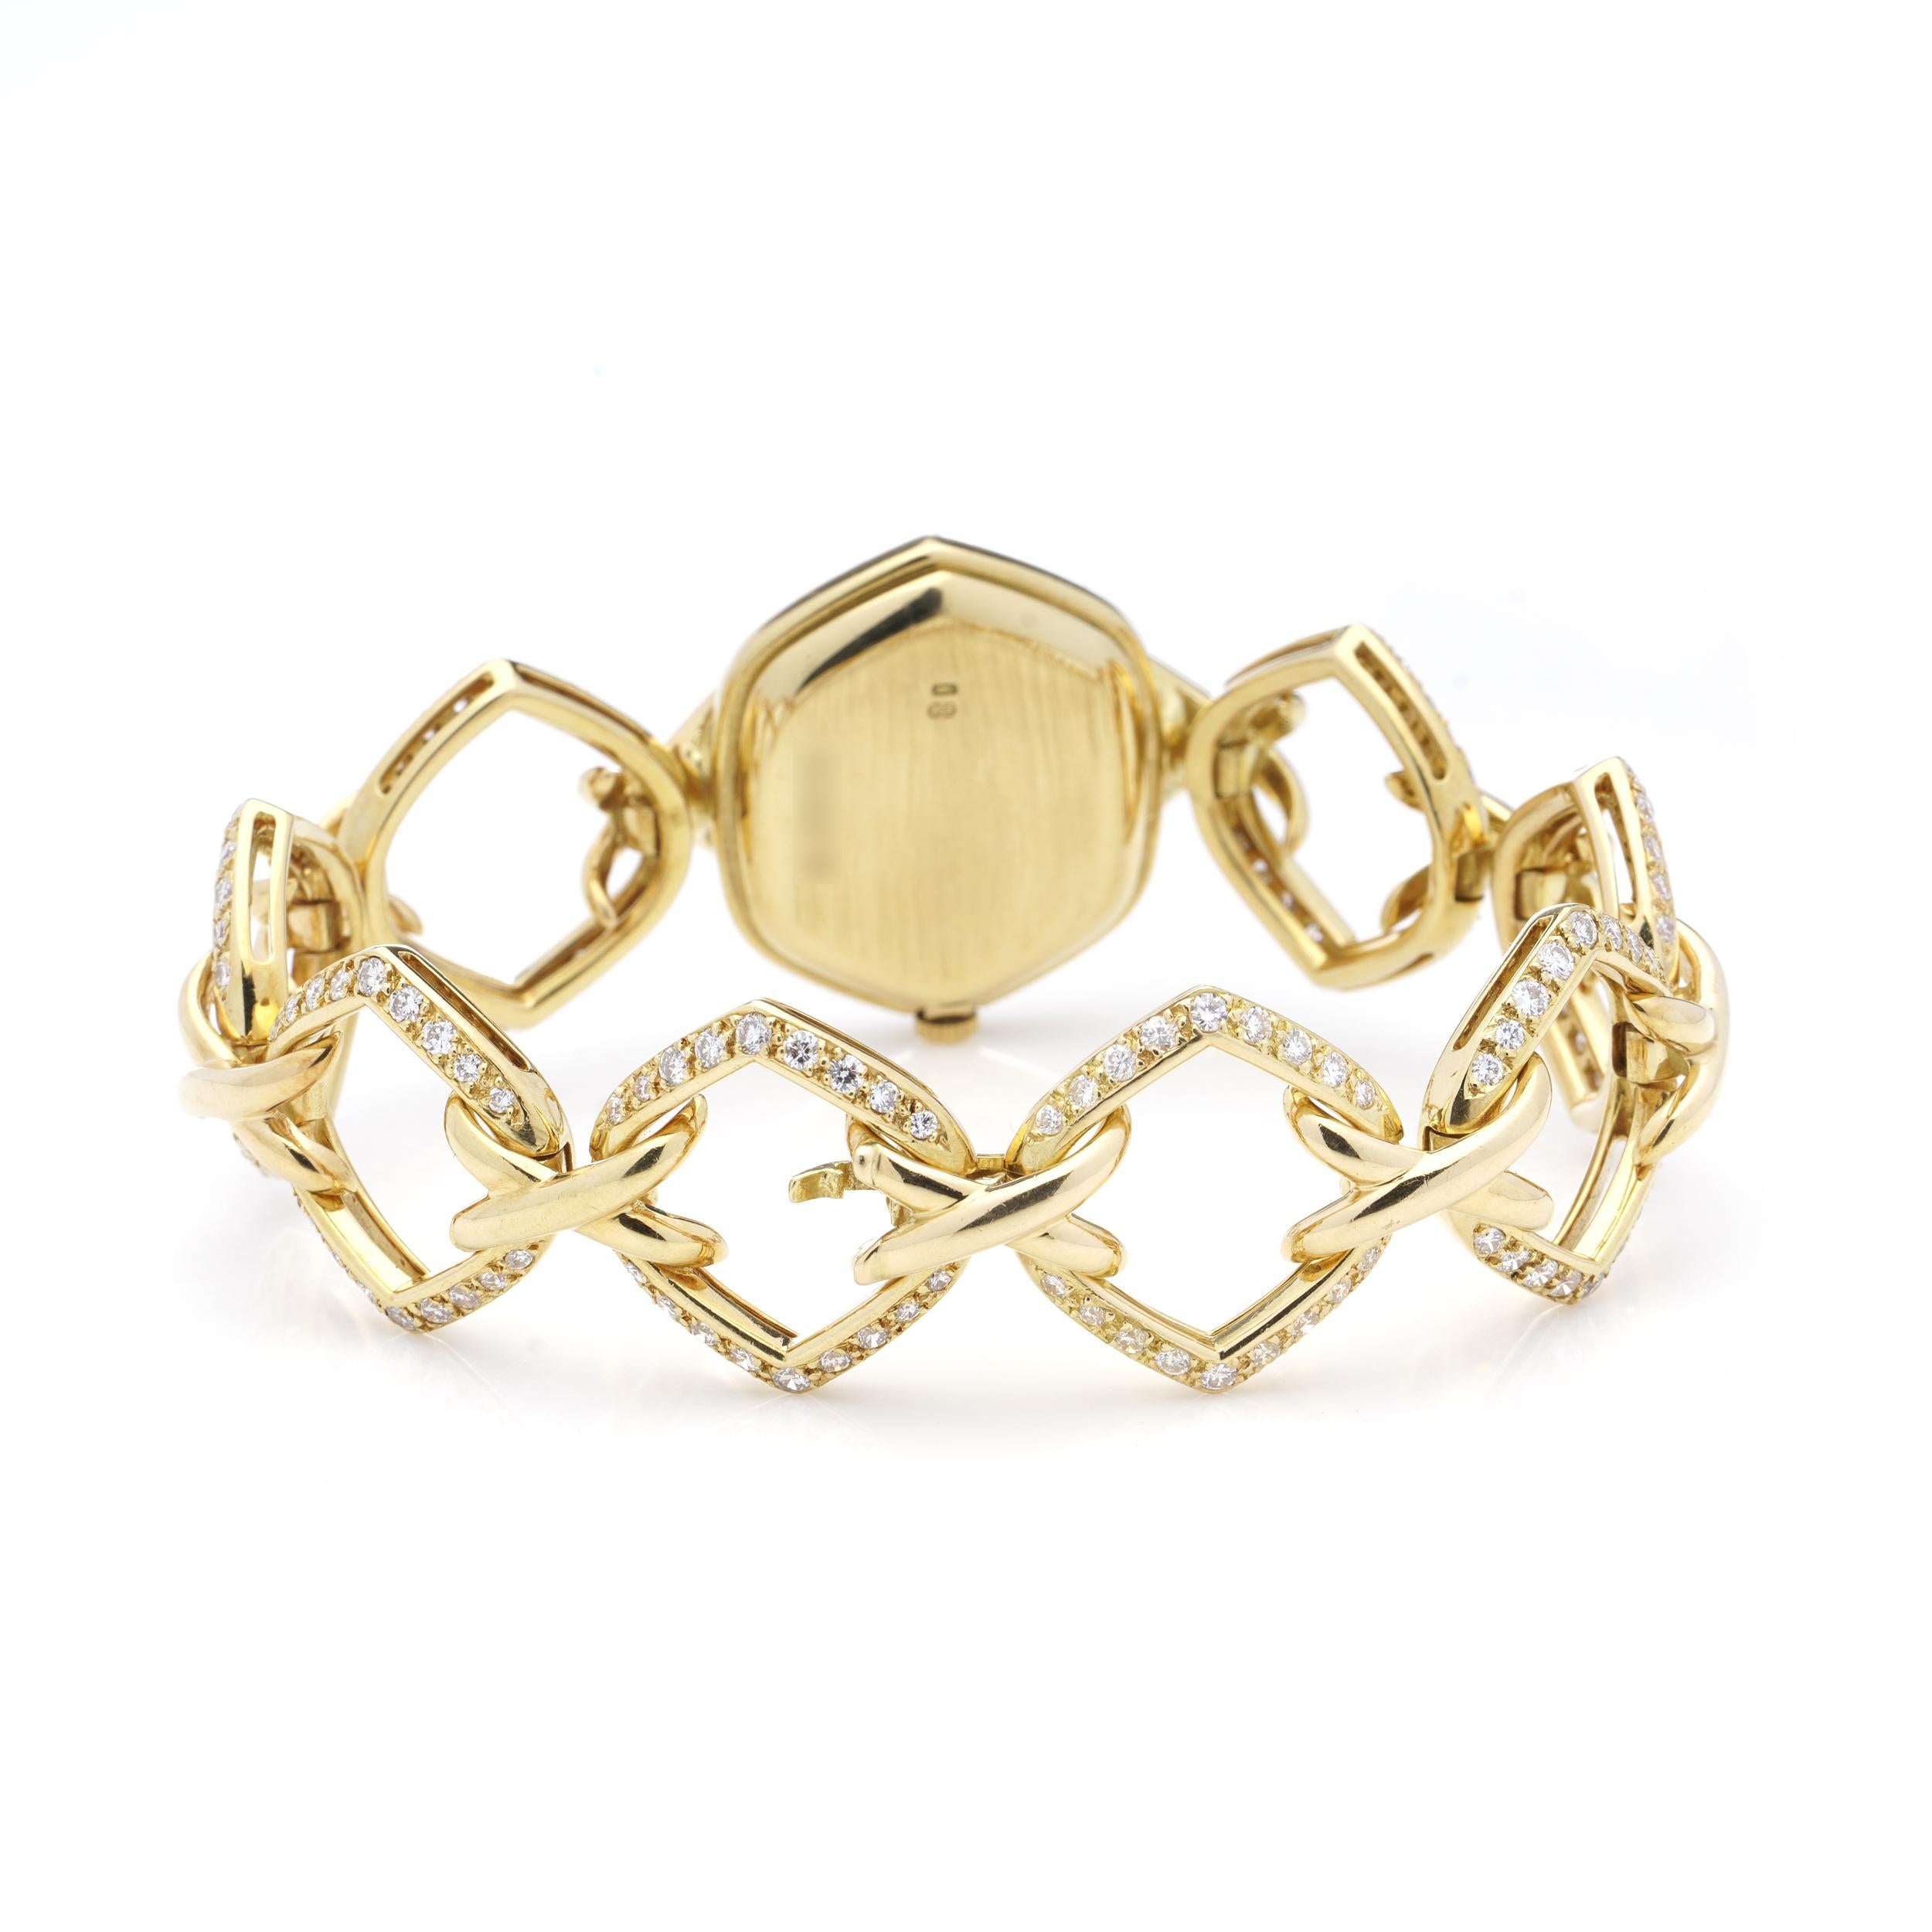 Brilliant Cut Audemars Piguet 18 Karat Yellow Gold Ladies Wristwatch with Diamonds For Sale